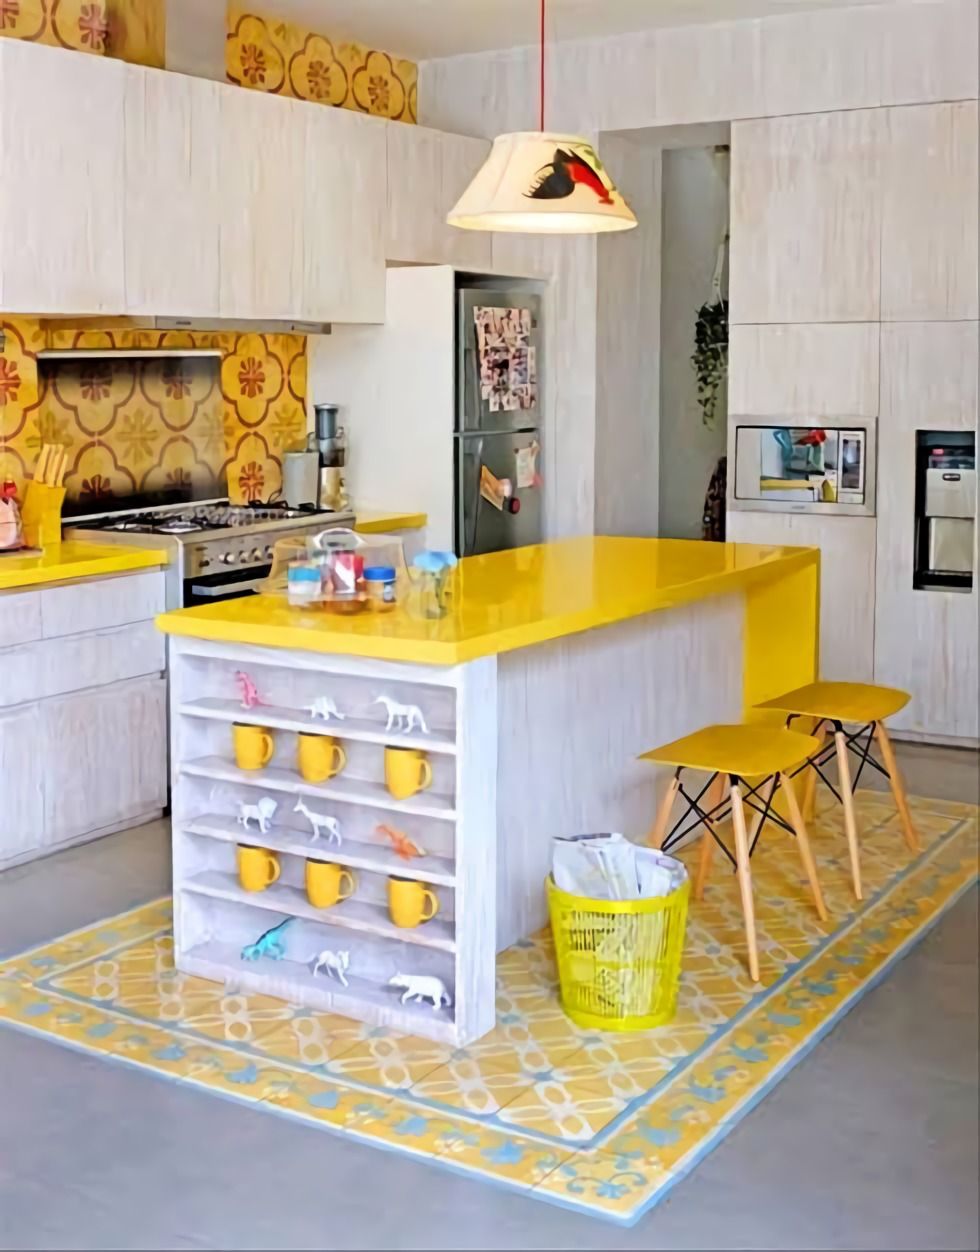 10 Desain Ruangan Dengan Cat Kuning Agar Makin Cerah Dan Estetik